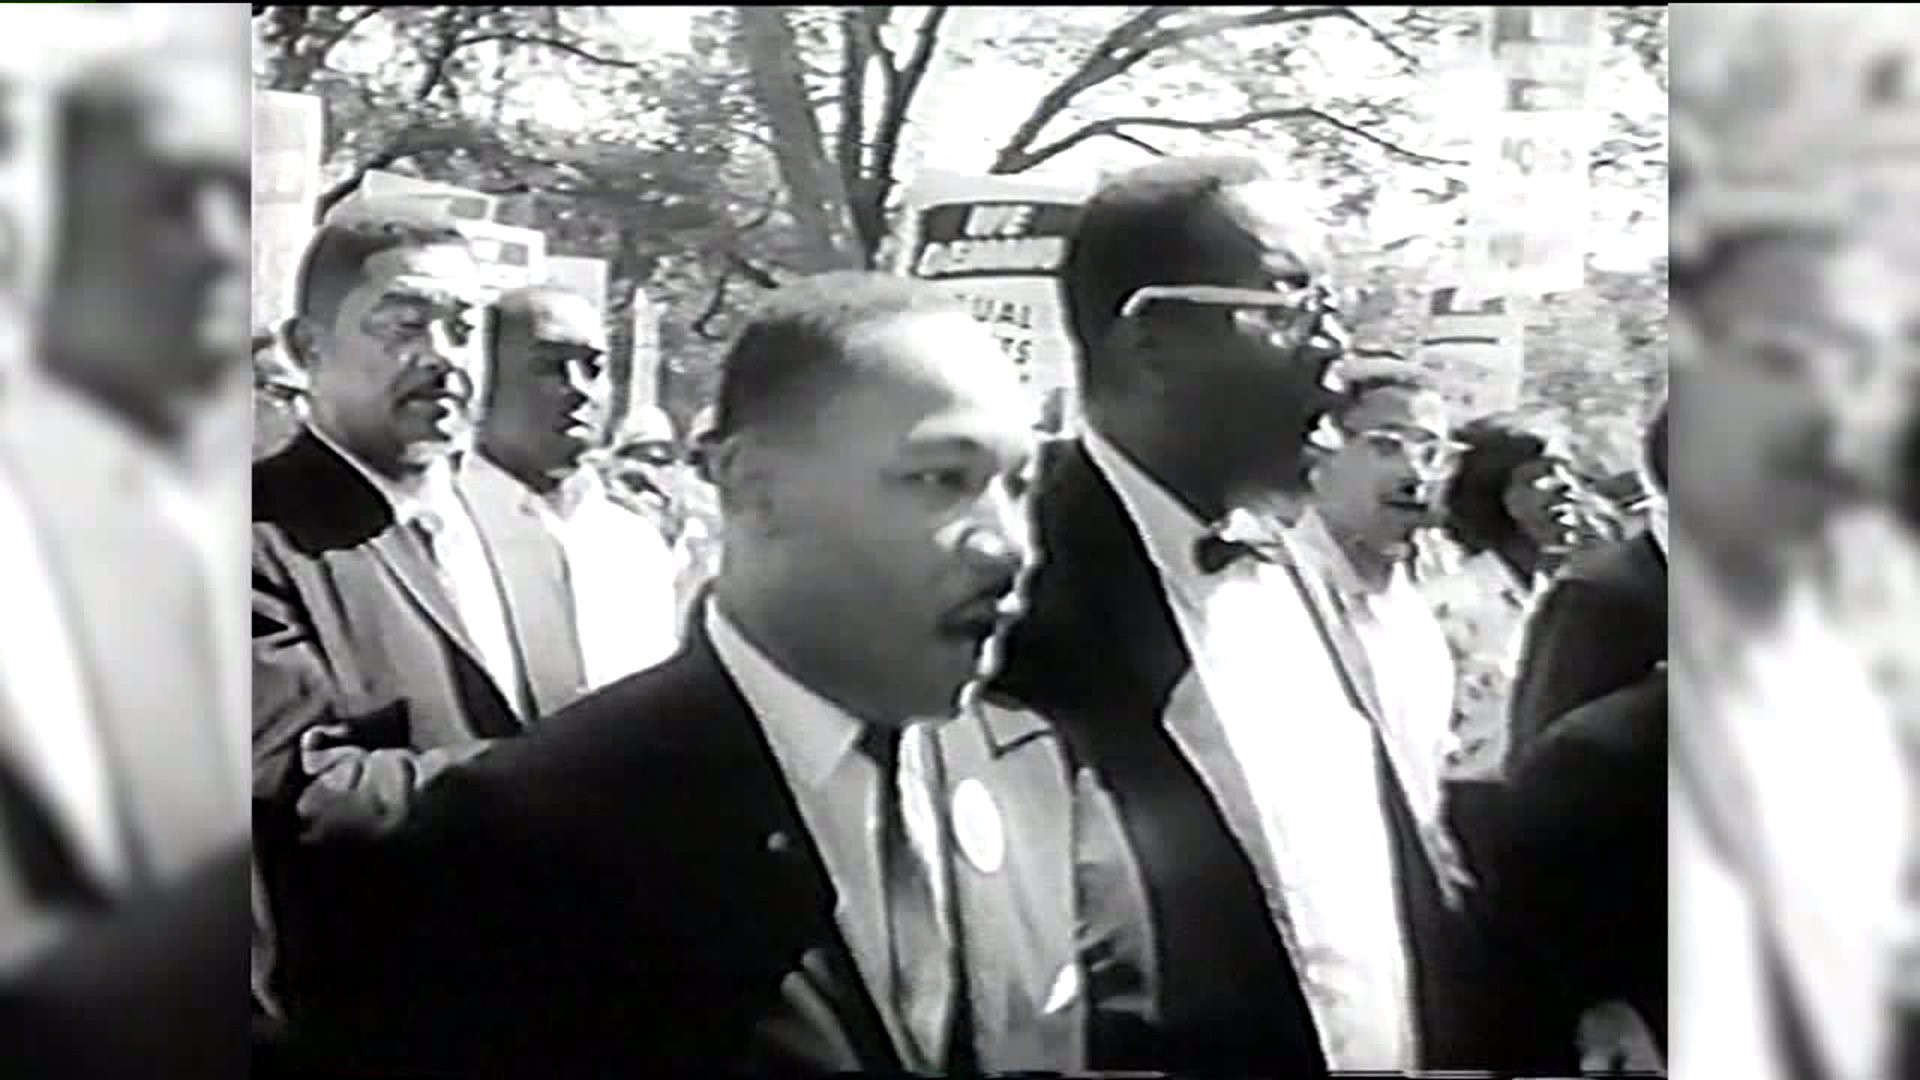 Honoring Rev. Martin Luther King Jr.